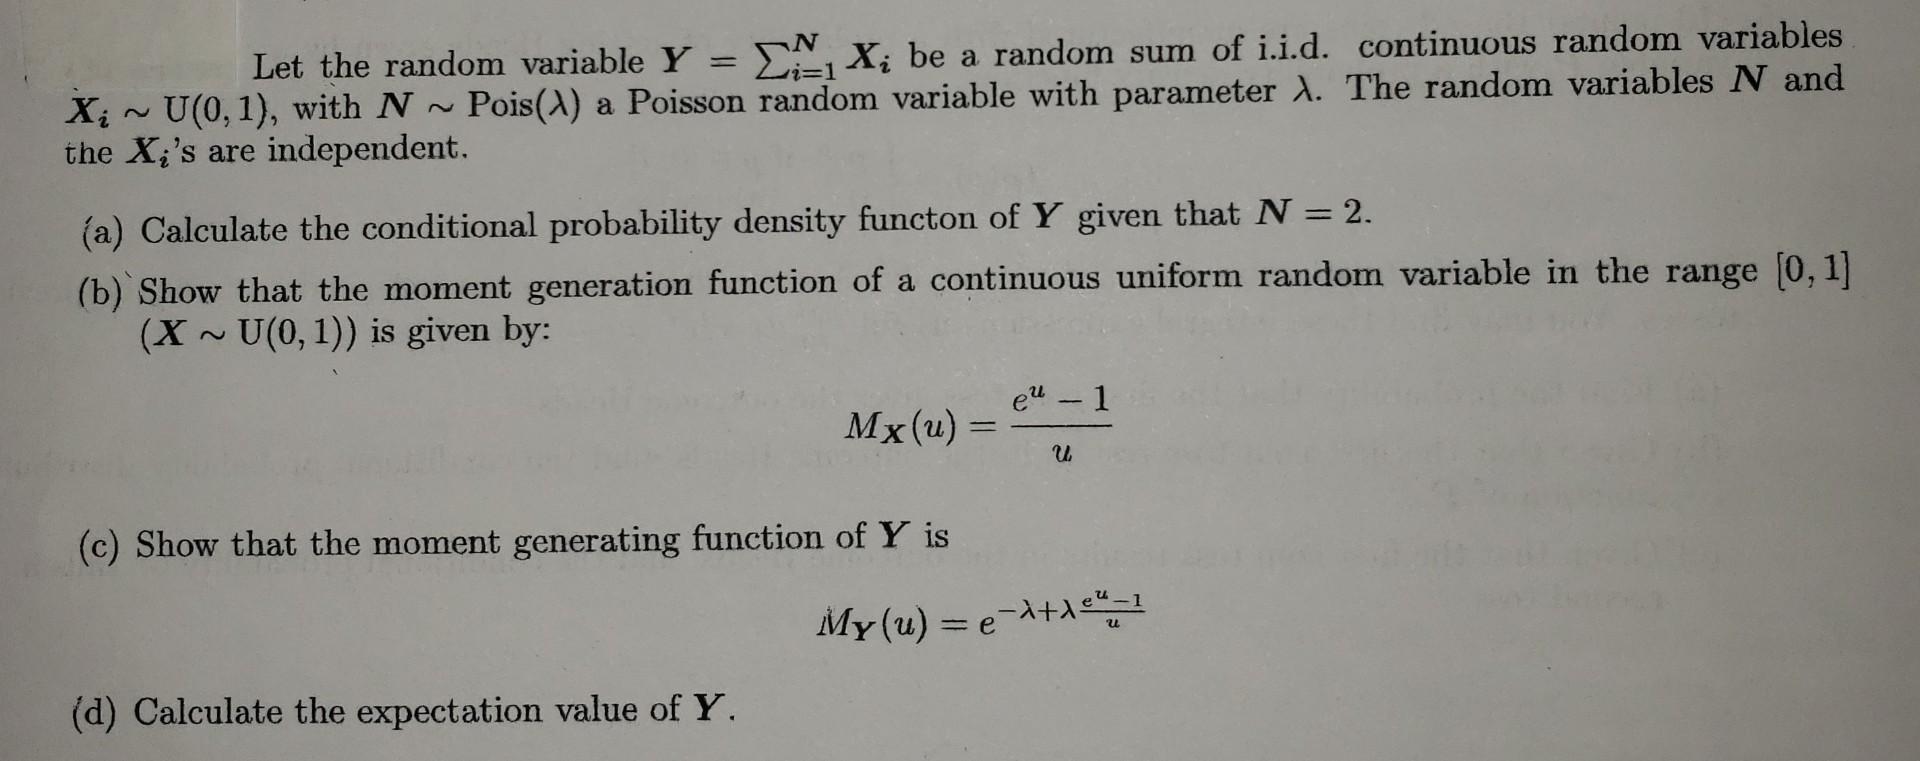 Solved Let The Random Variable Y Ln X Be A Random Sum Chegg Com